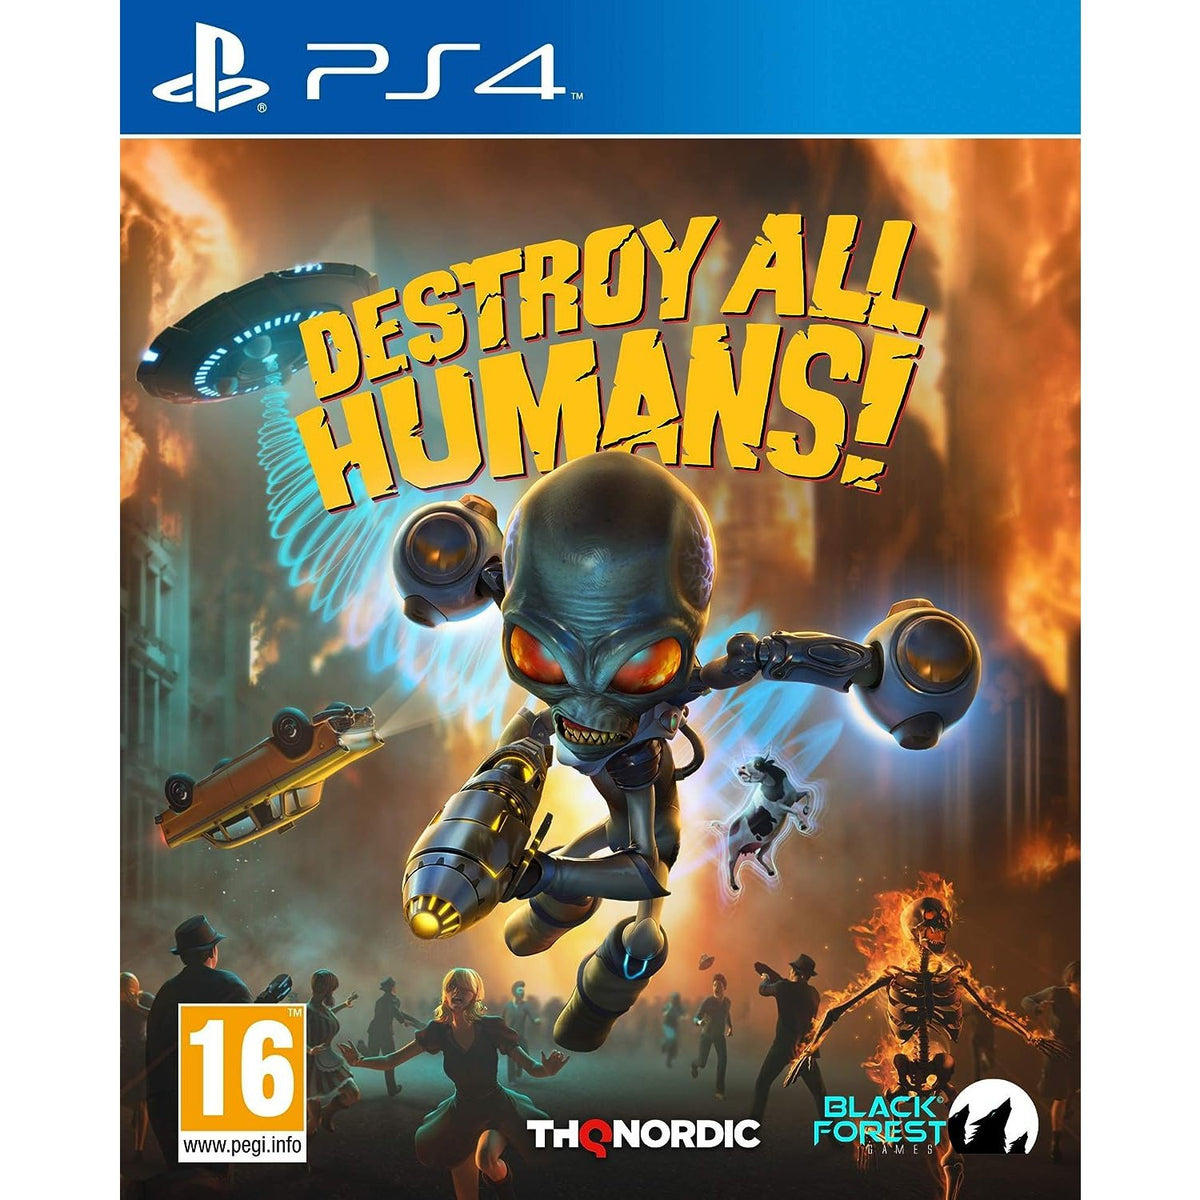 Destroy All Humans! Sony PlayStation 4